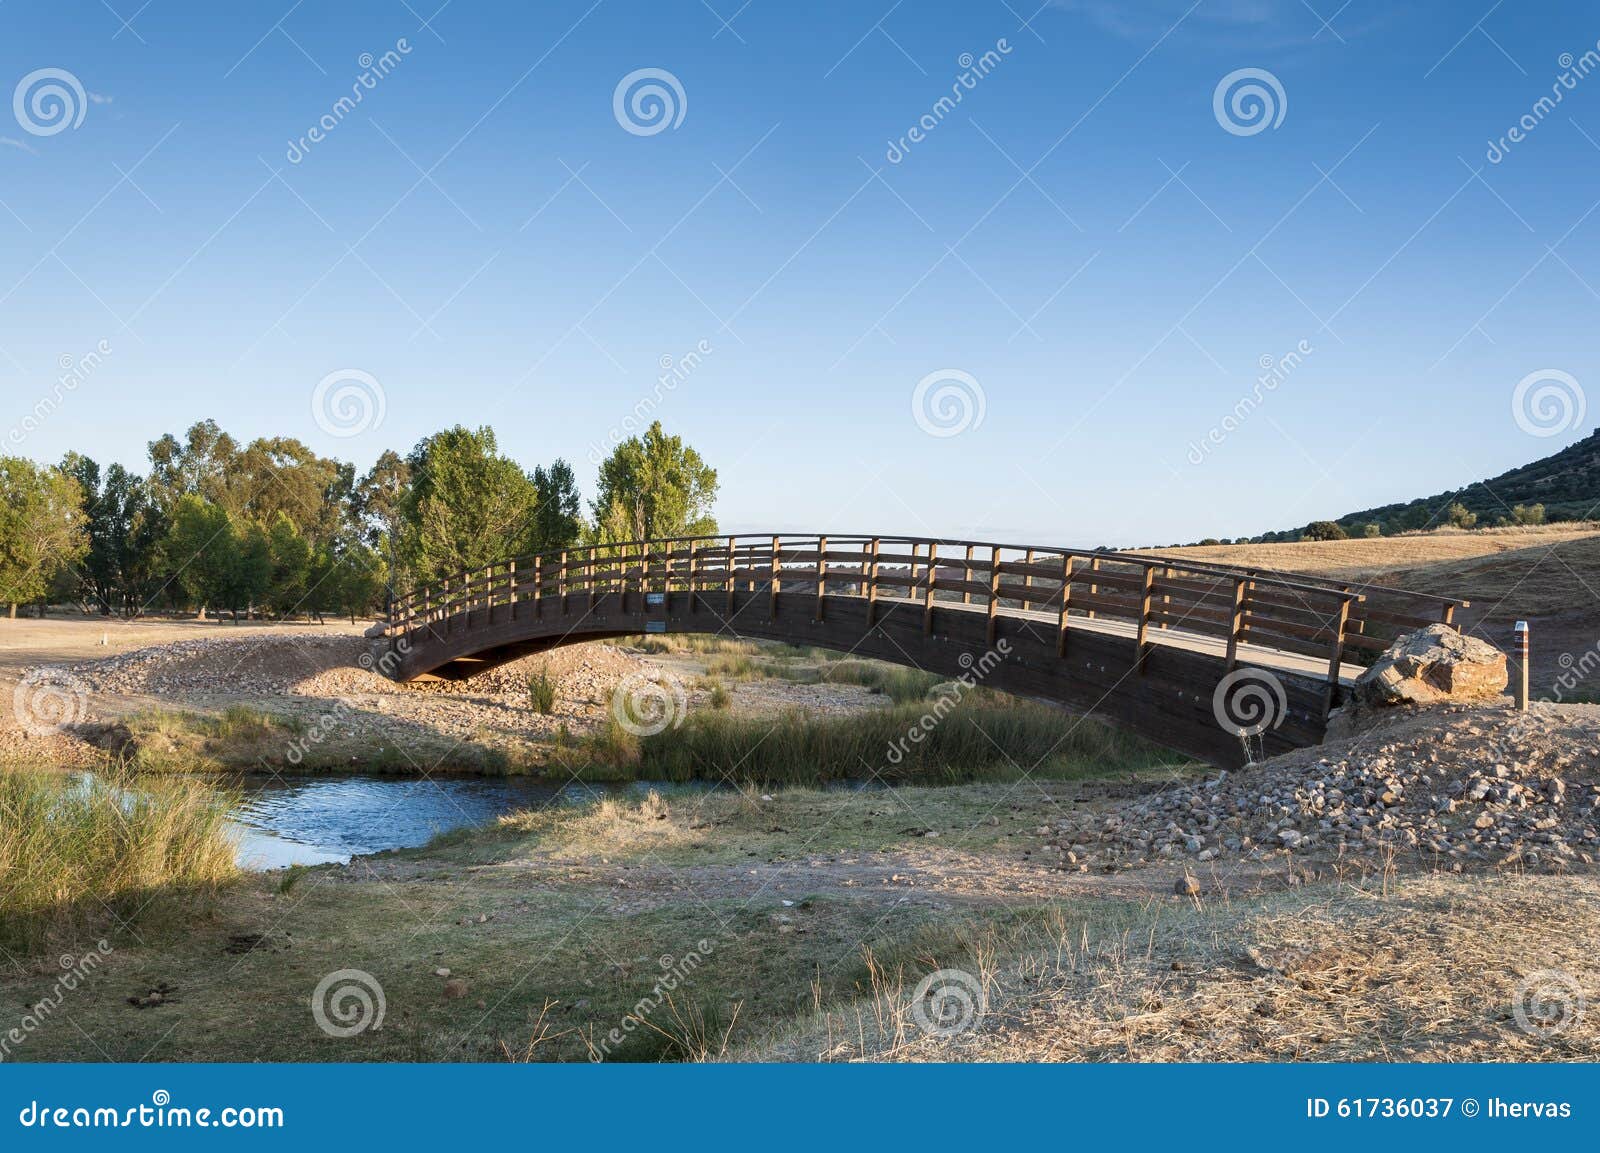 small wooden bridge